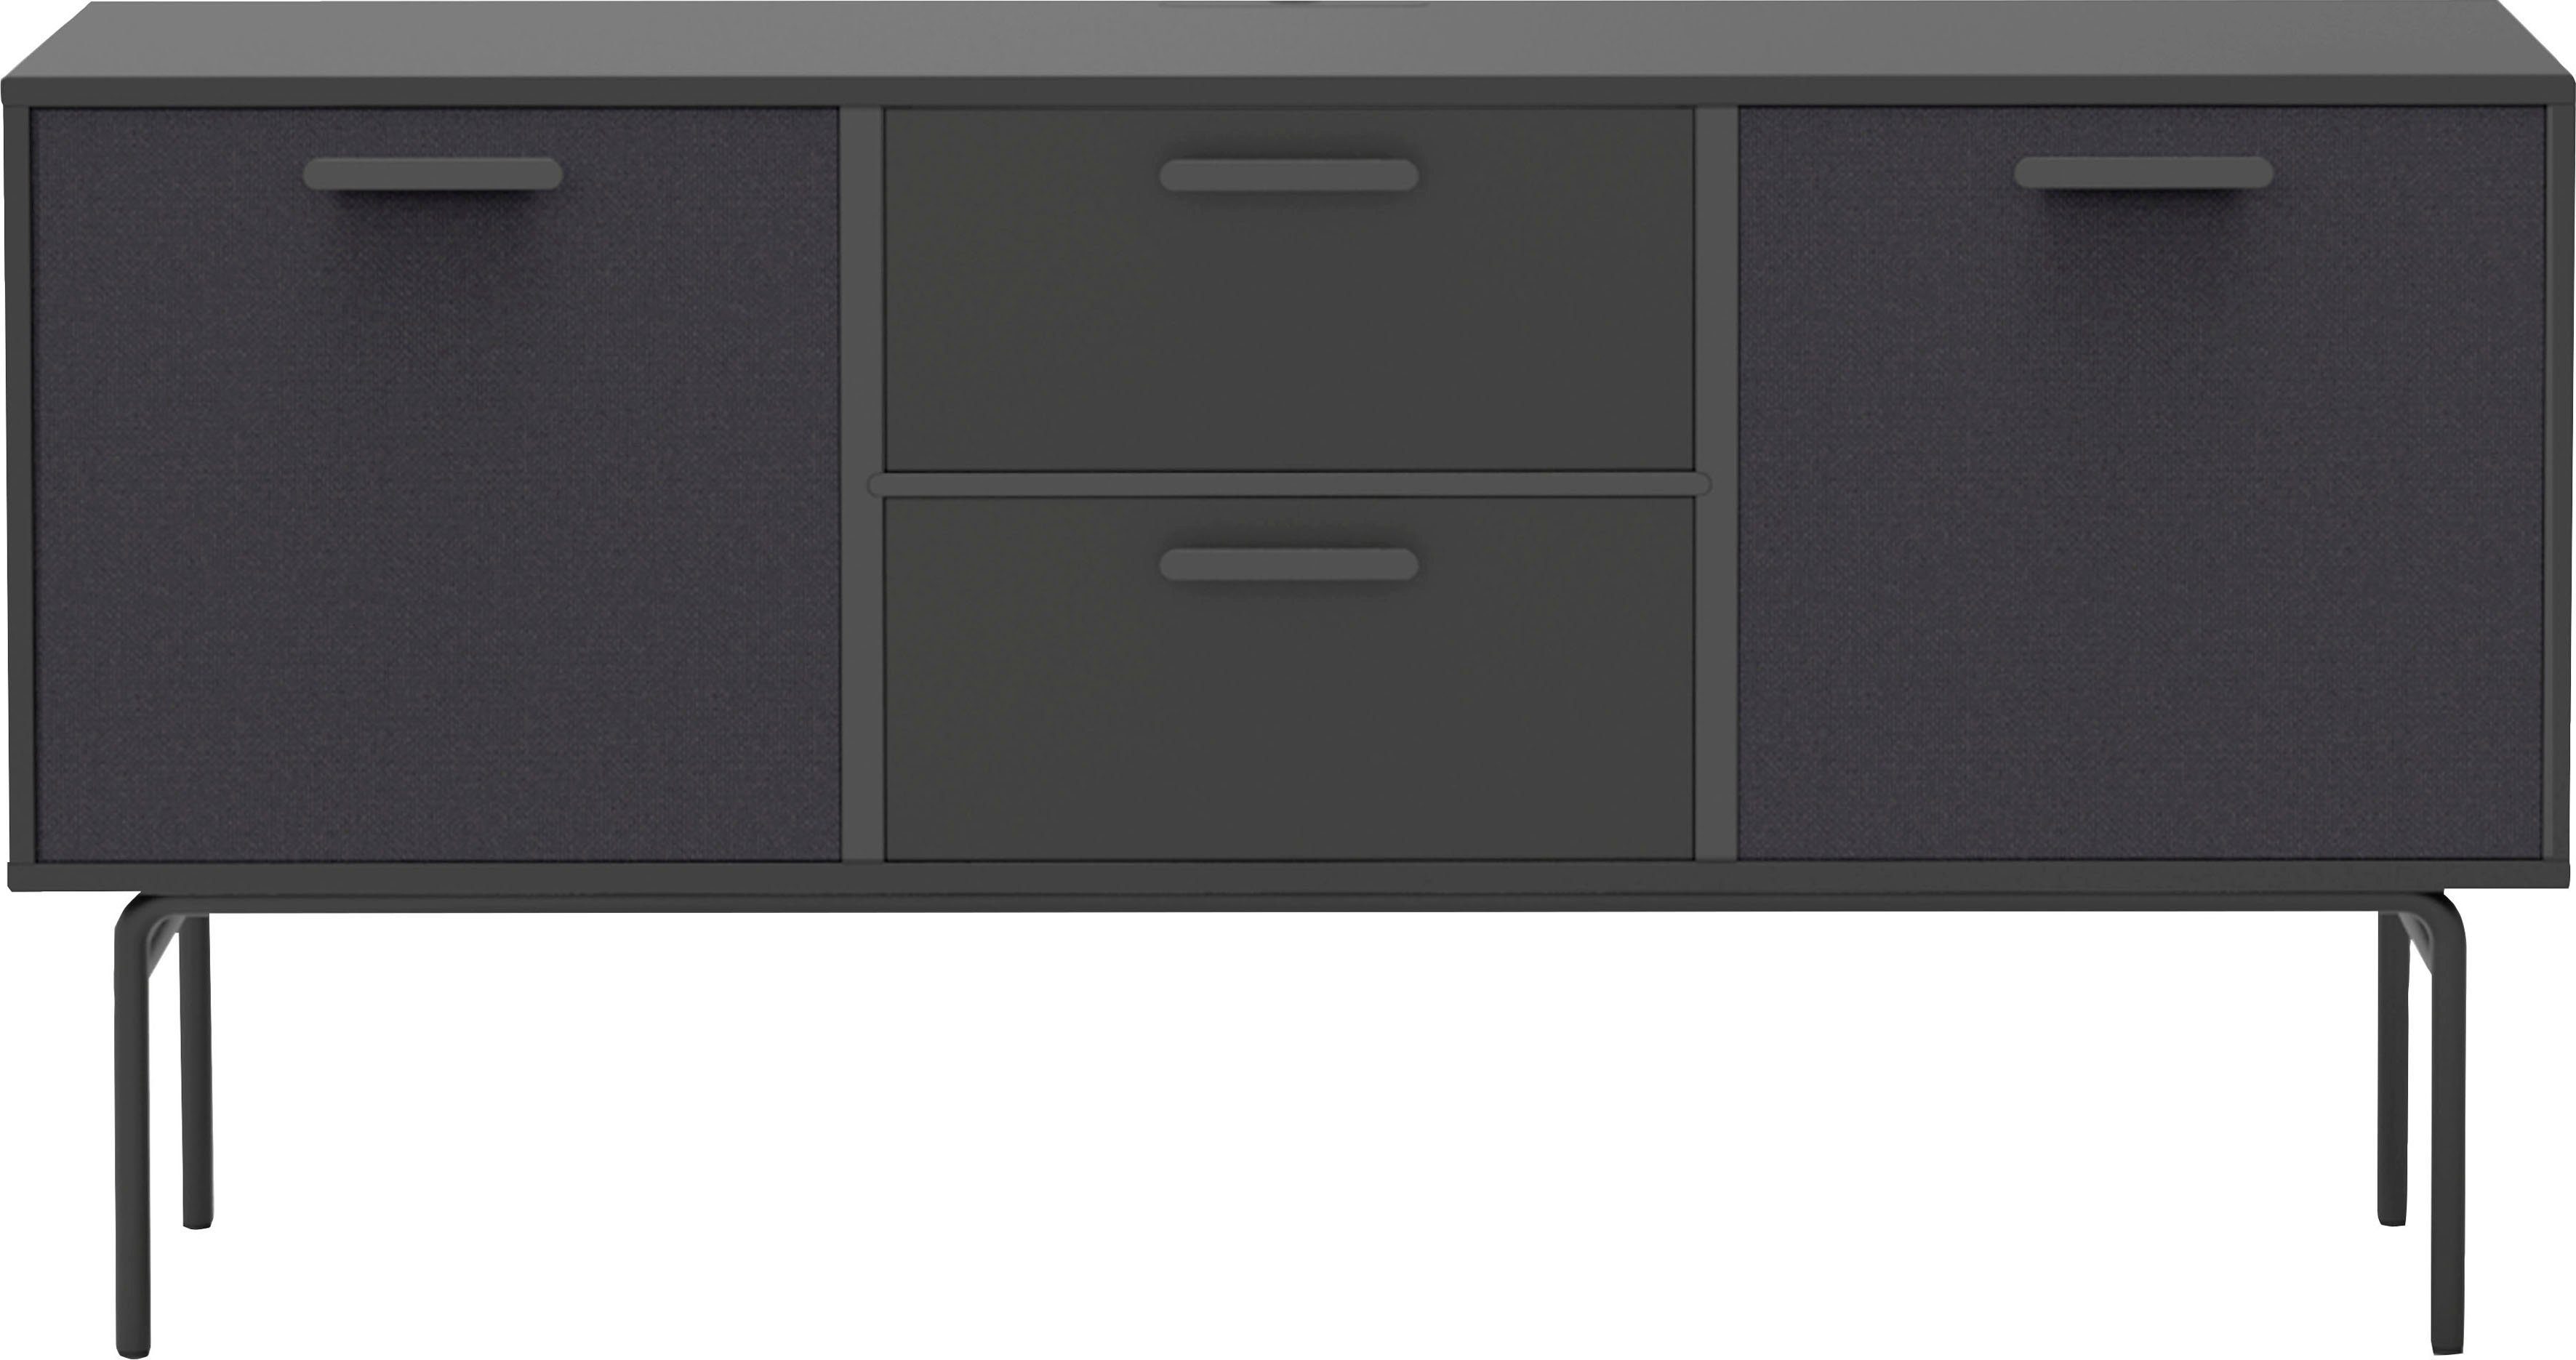 Hammel Furniture Media-Board Keep by Hammel, AV-Korpus auf Sockel, 2  Schubladen und 2 Stofftüren, Breite 113,8 cm, Maße (B/T/H): 113,8/42/42,8 cm